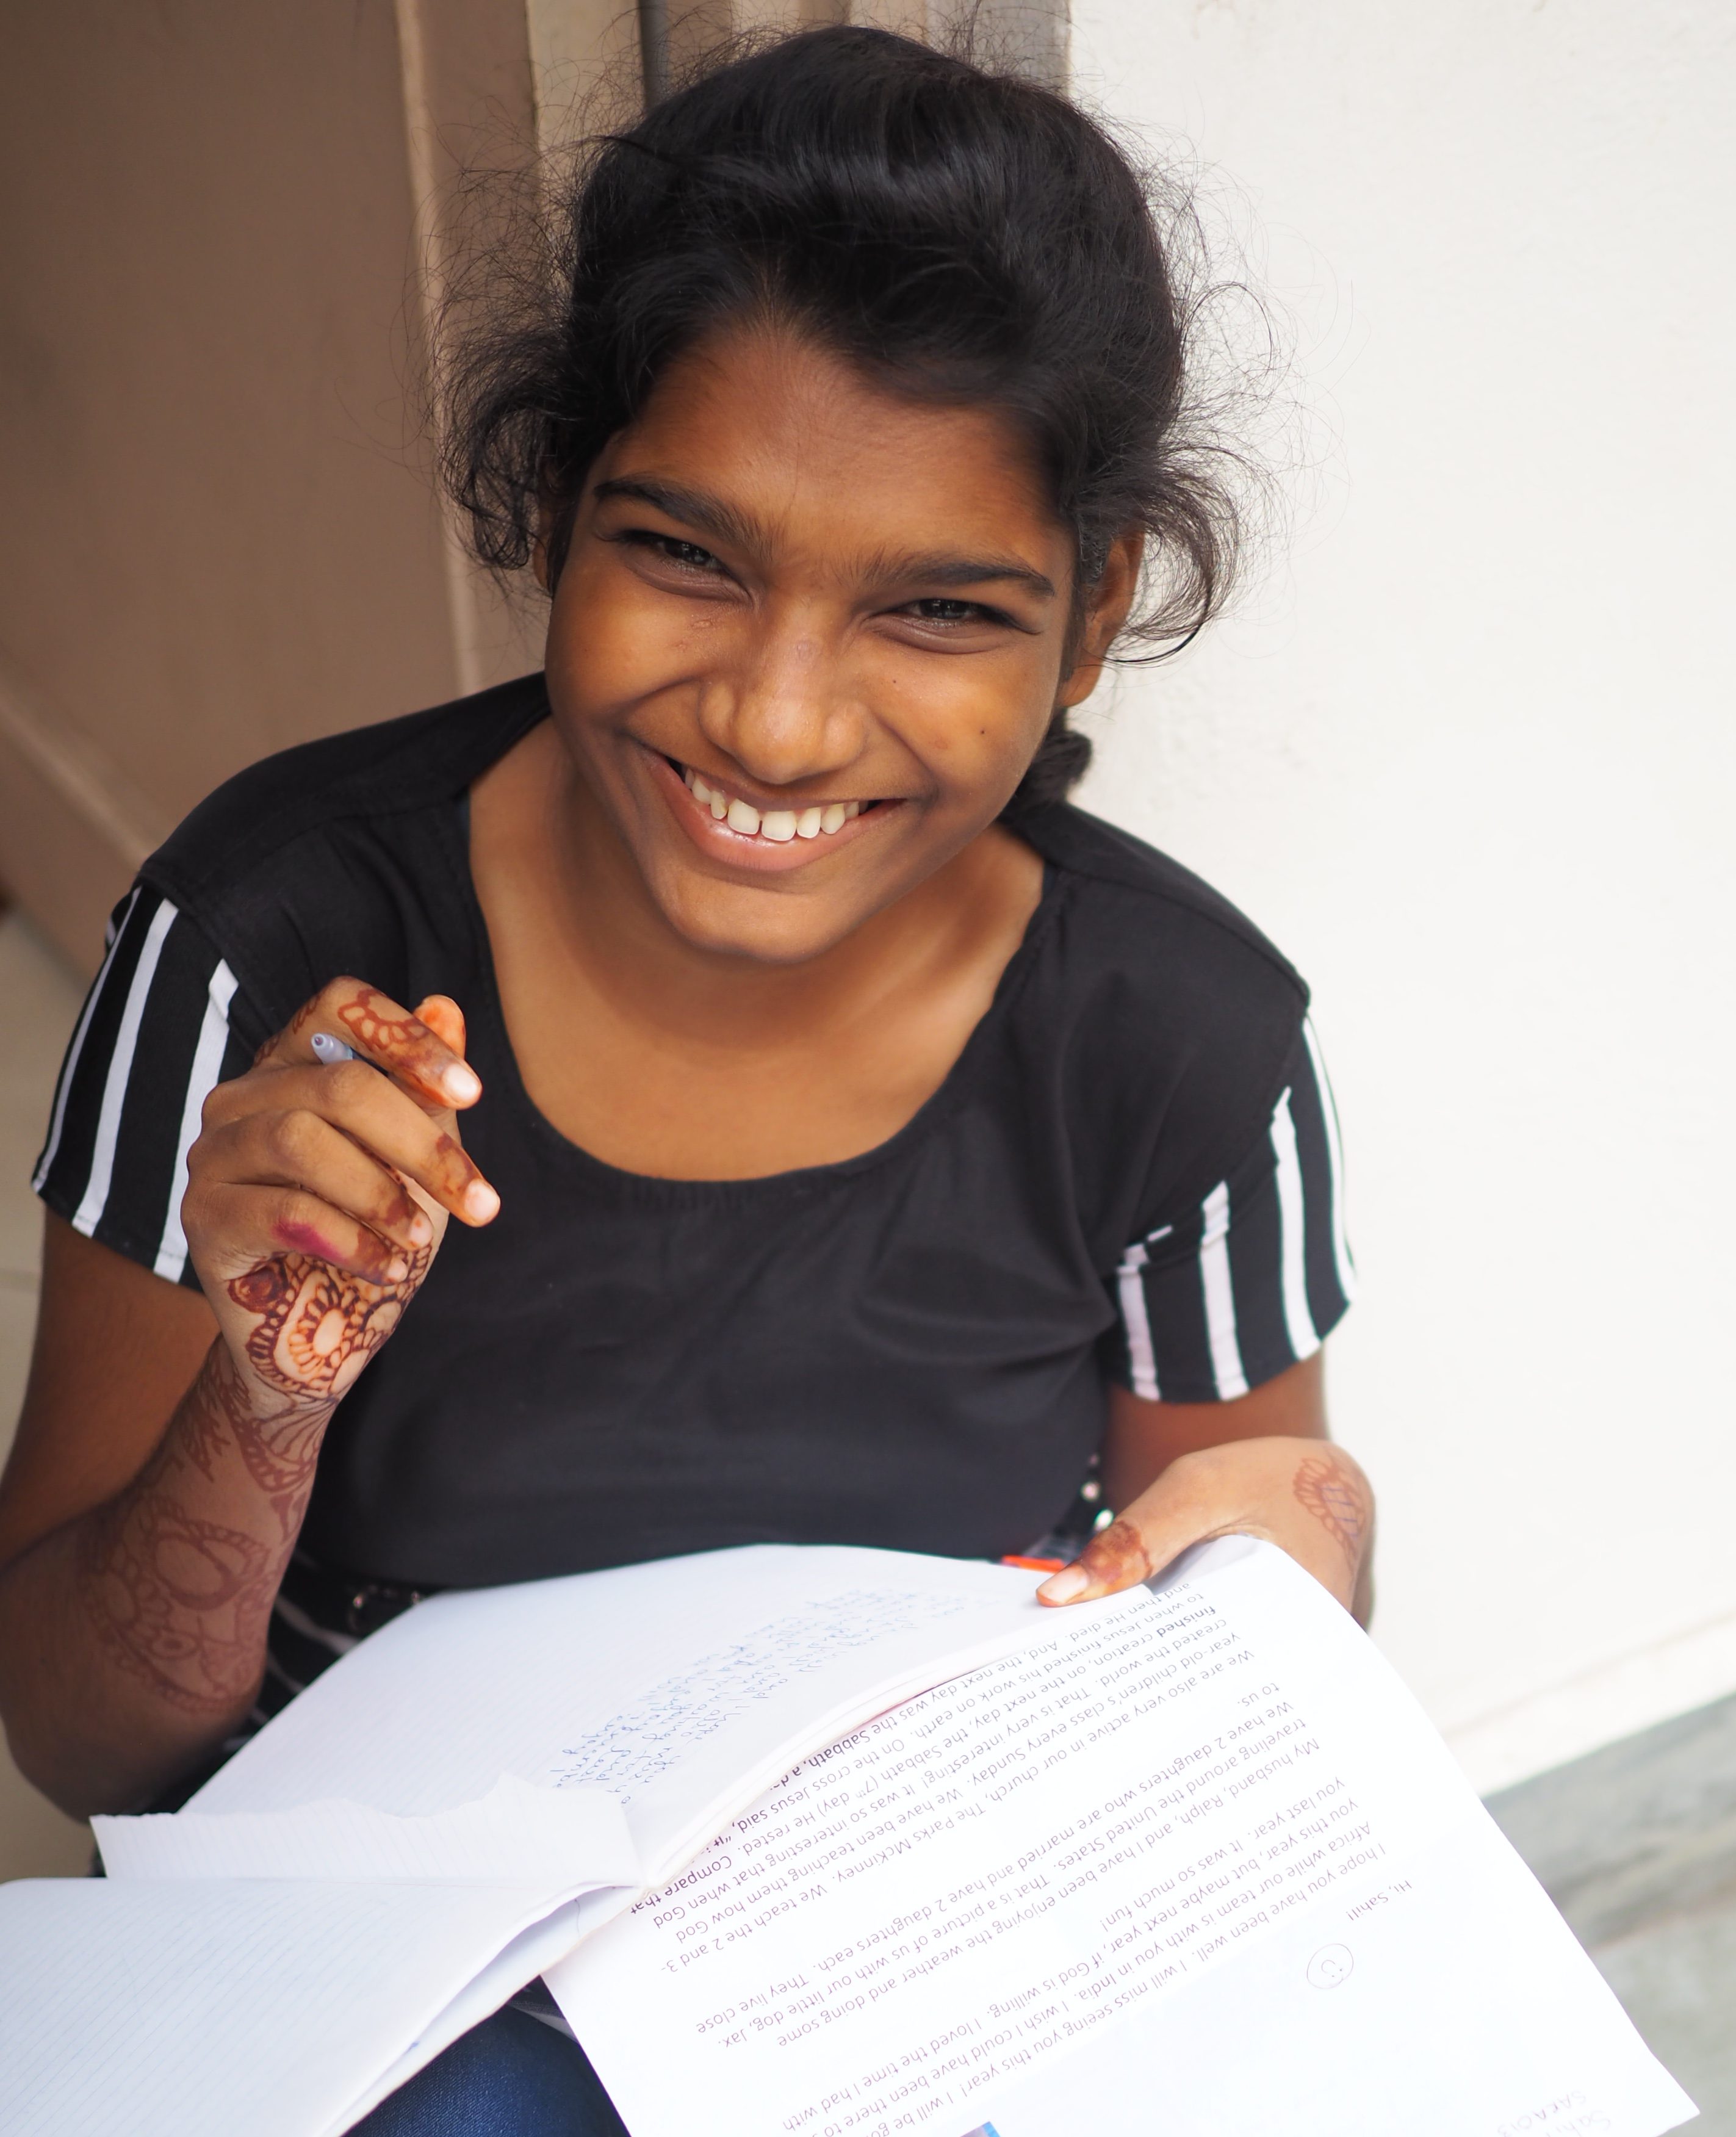 Harshita in South Asia responding to her sponsor's letter.